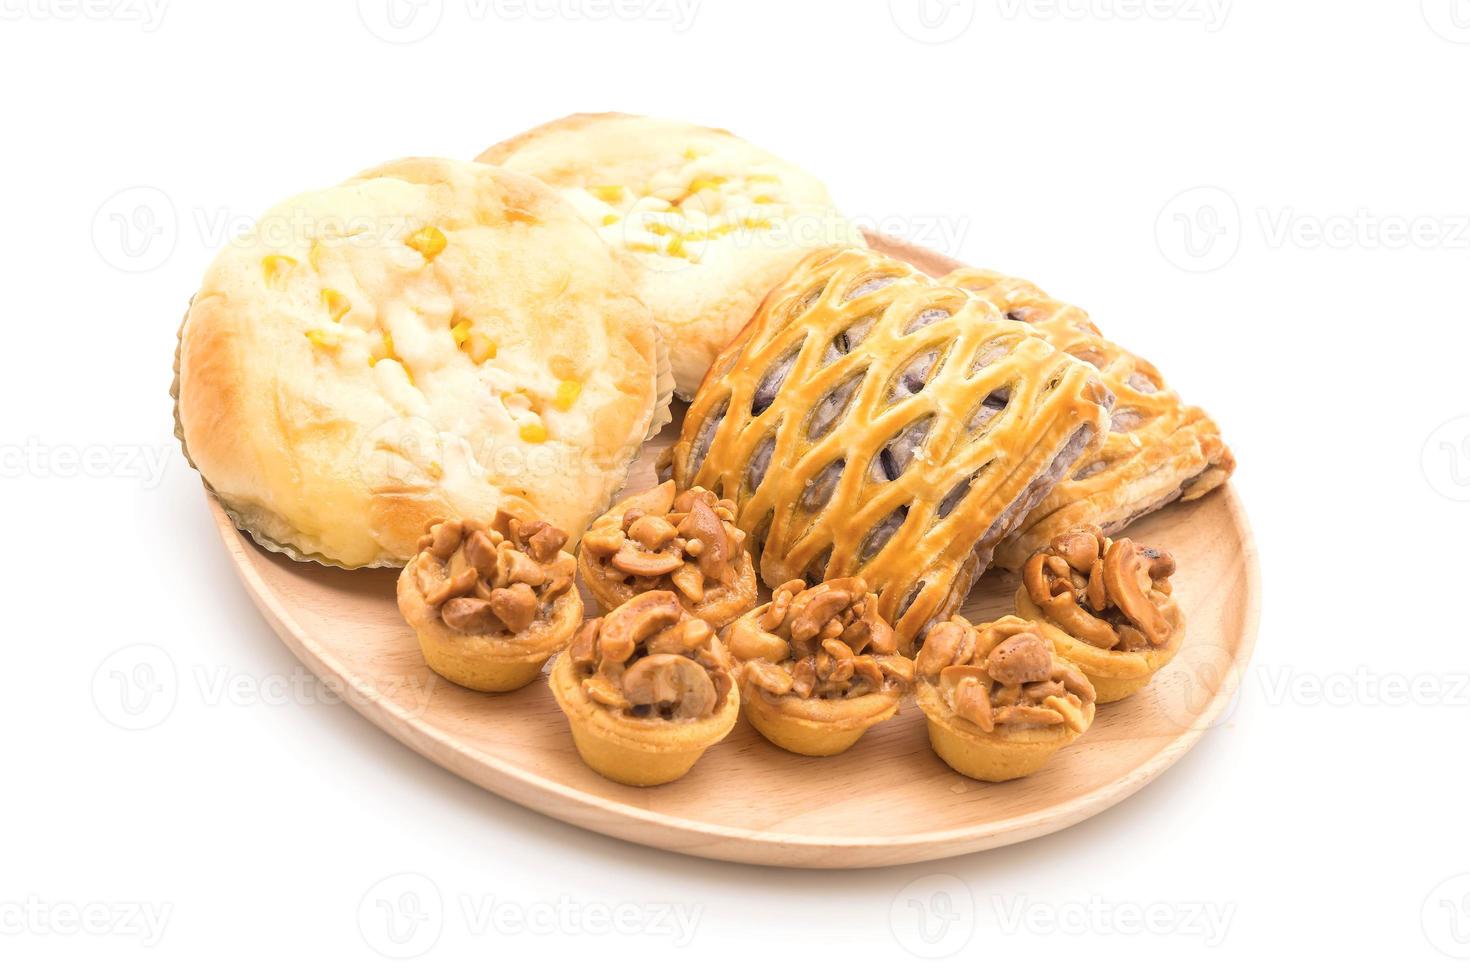 toffee cake, brood met maïs mayonaise en taro taarten op witte achtergrond foto